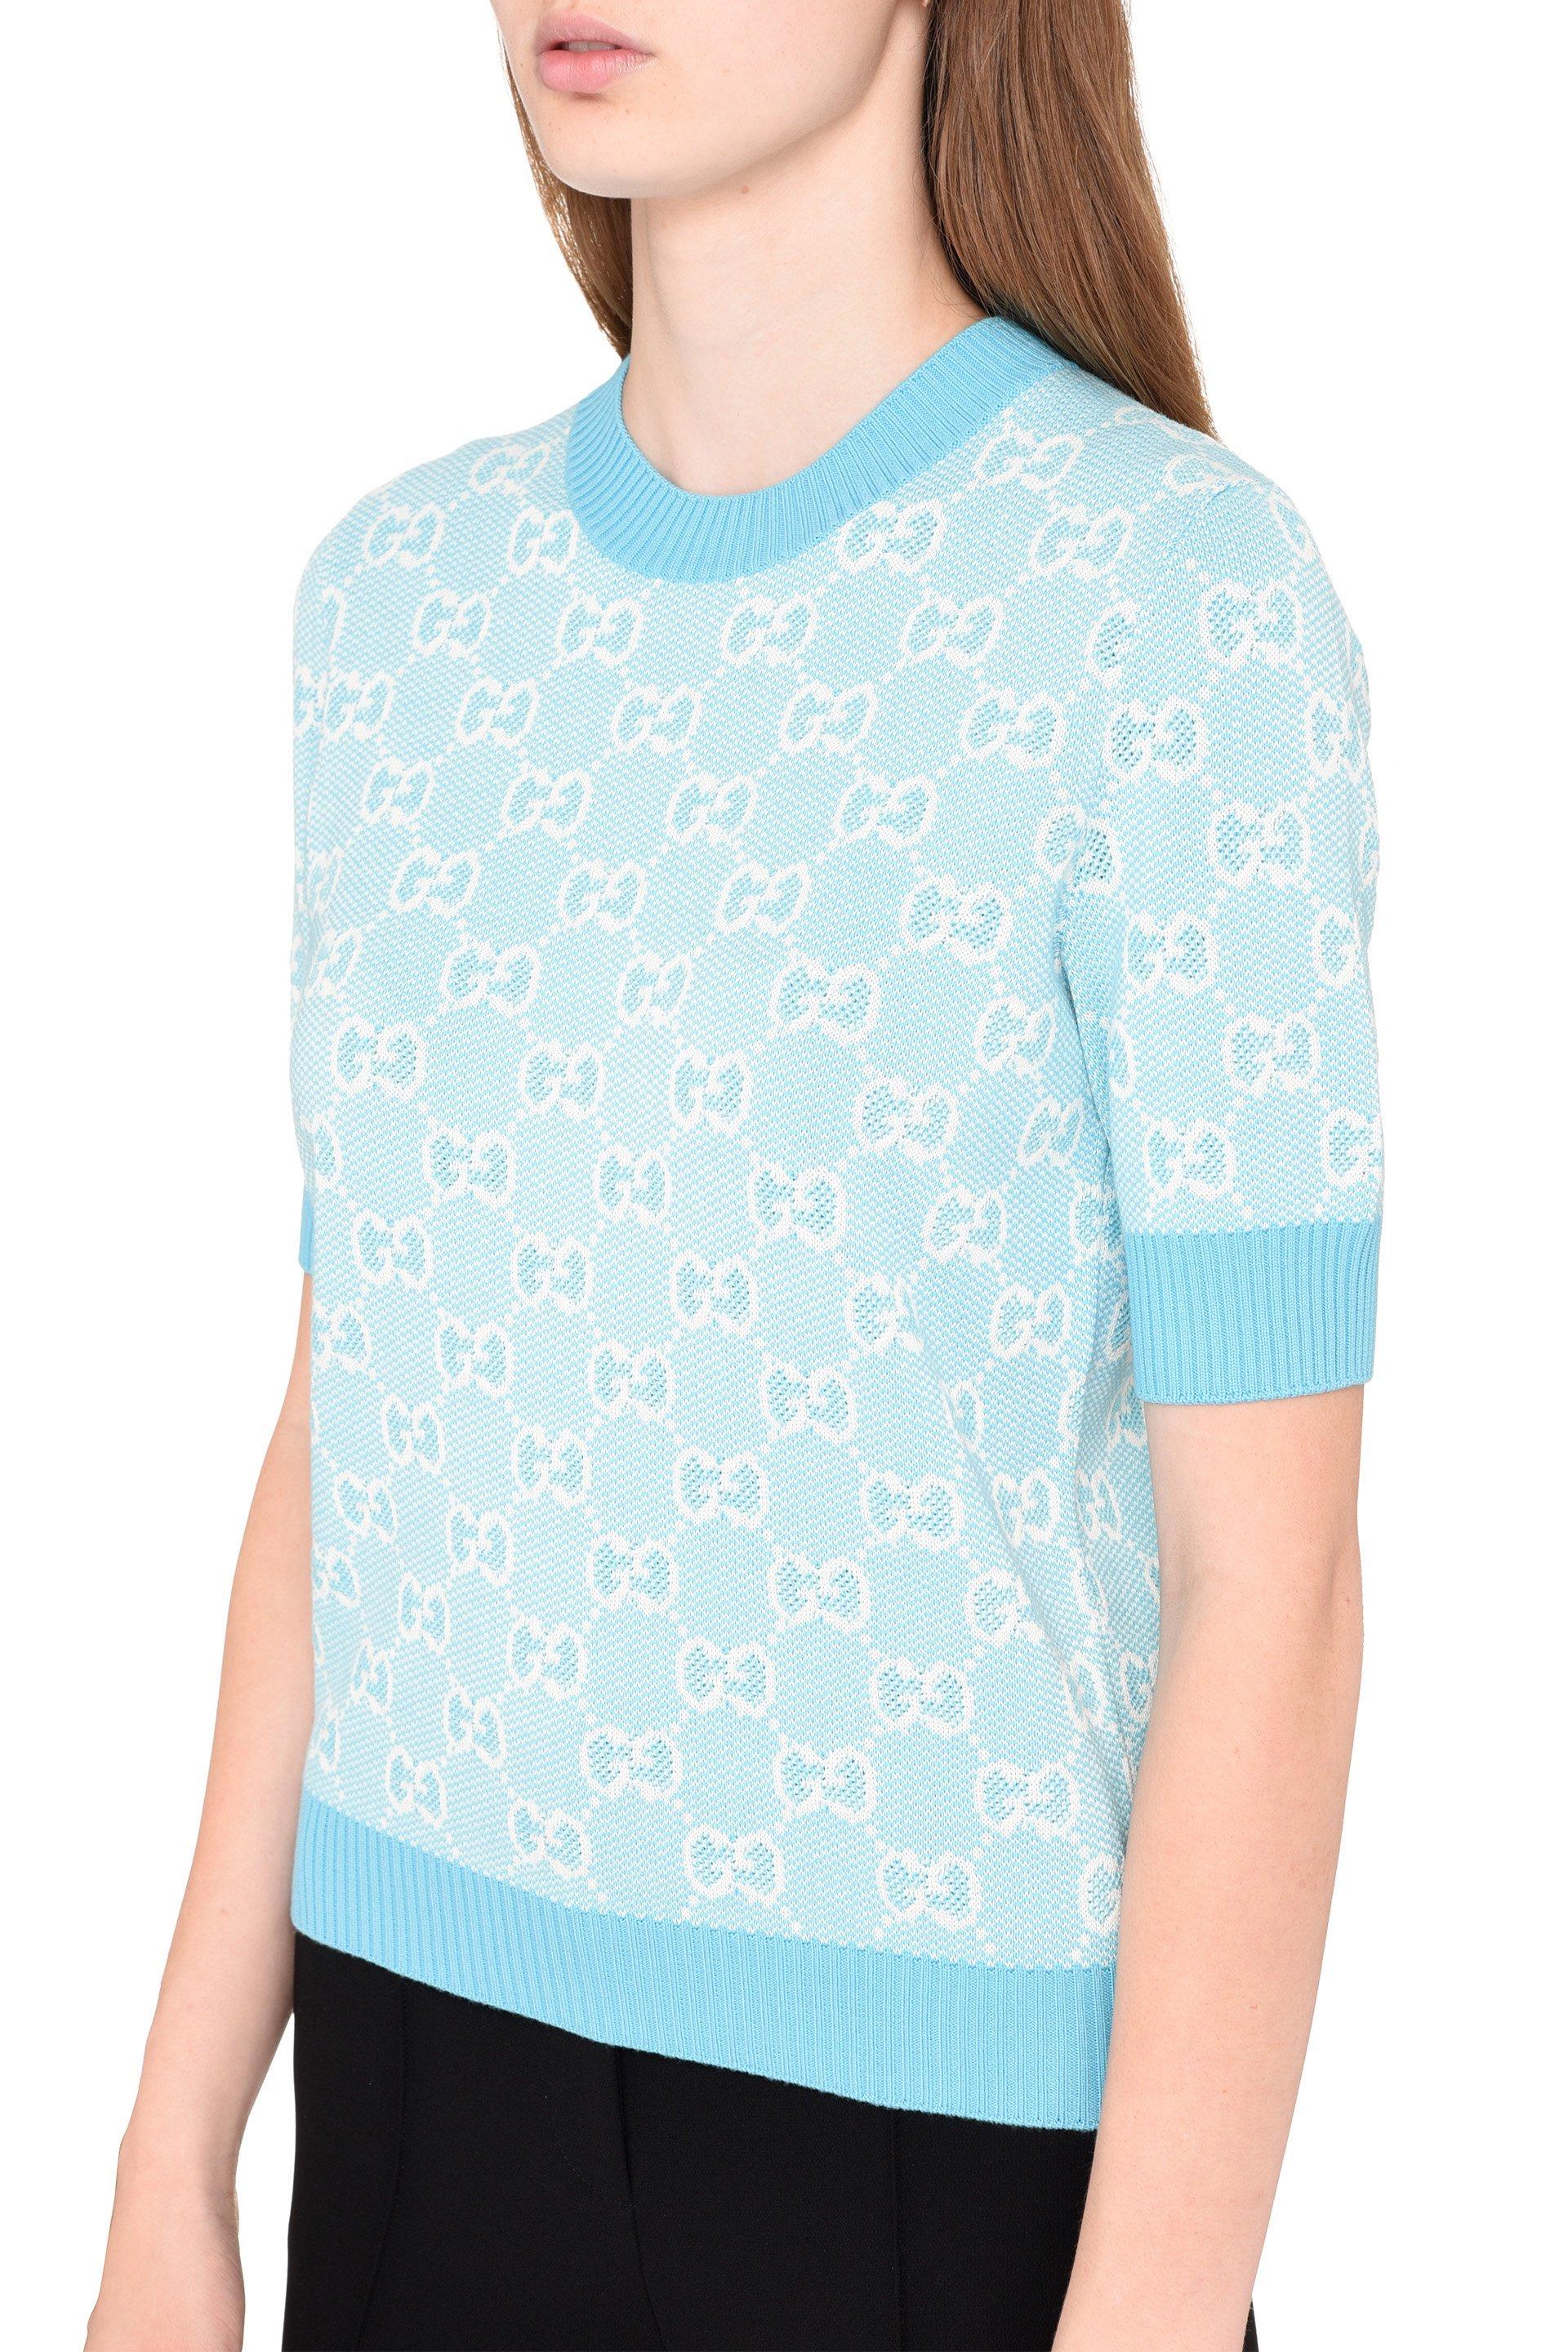 Gucci - monogram-jacquard Short-sleeved Jumper - Women - Wool/Polyamide/Spandex/Elastane - L - Blue